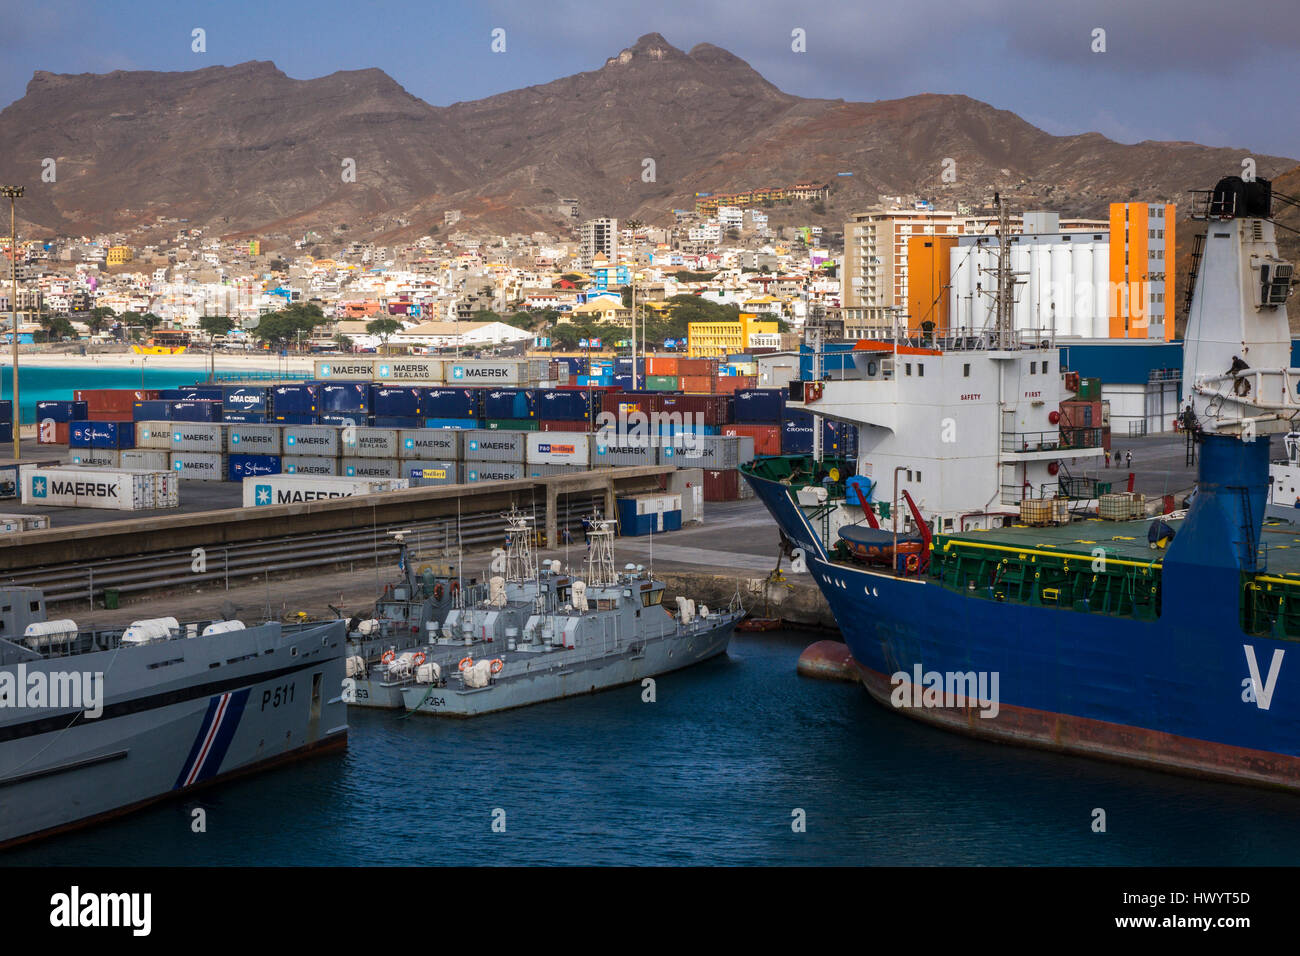 Shipping in Mindelo Port, Sao Vicente, Cape Verde Islands Stock Photo